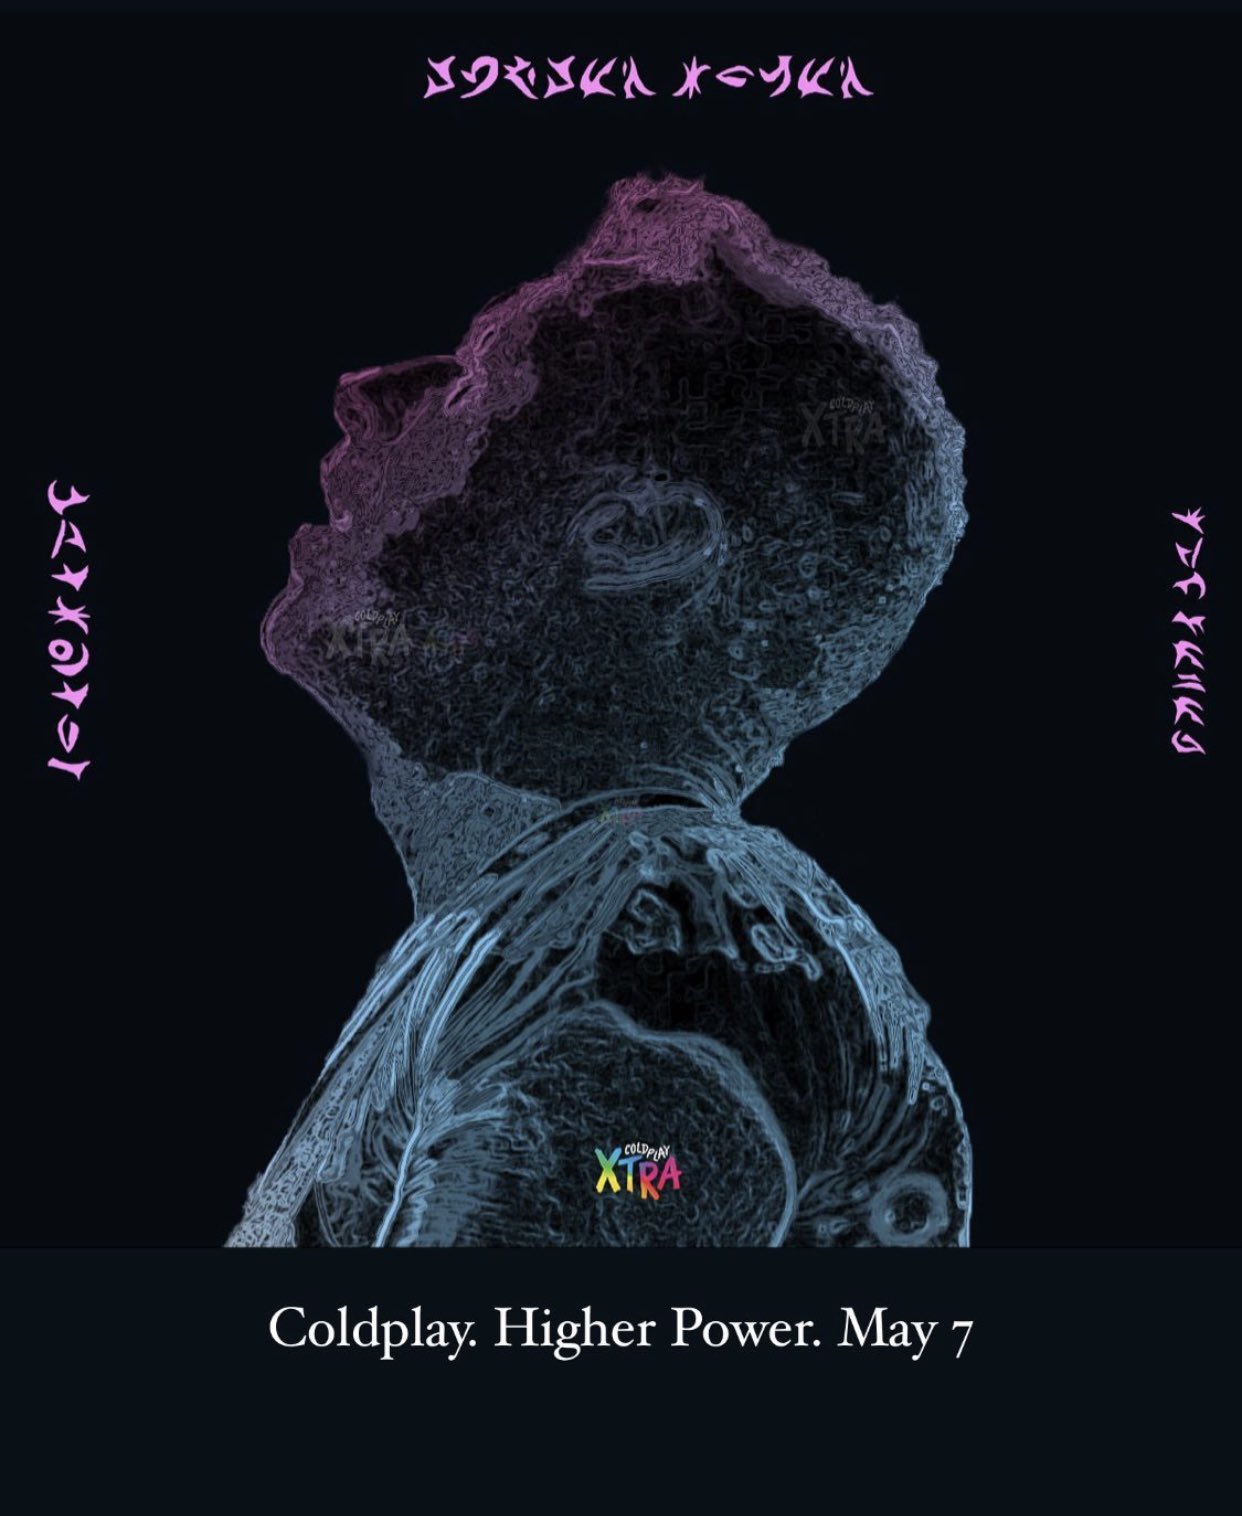 ColdplayXtra on X: Will Champion #HigherPower